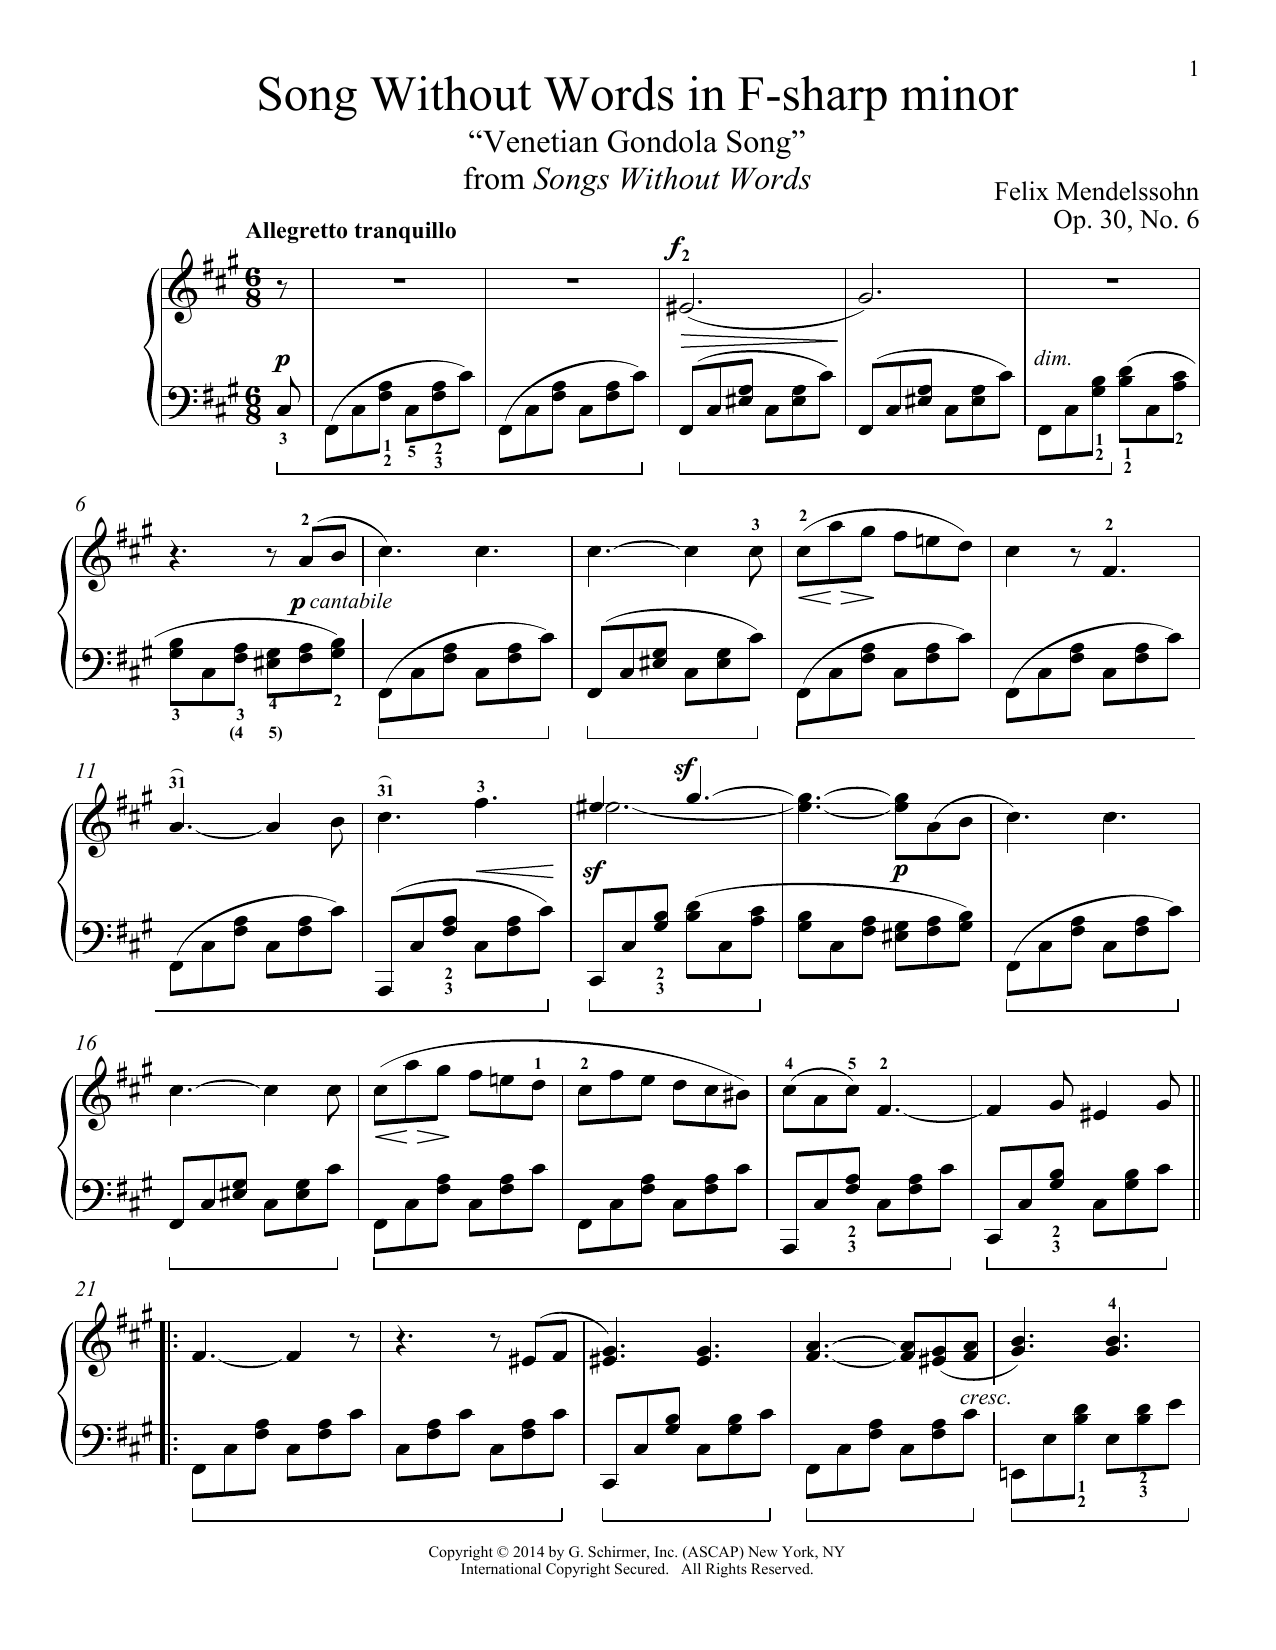 Download Felix Mendelssohn Song Without Words In F-Sharp Minor 